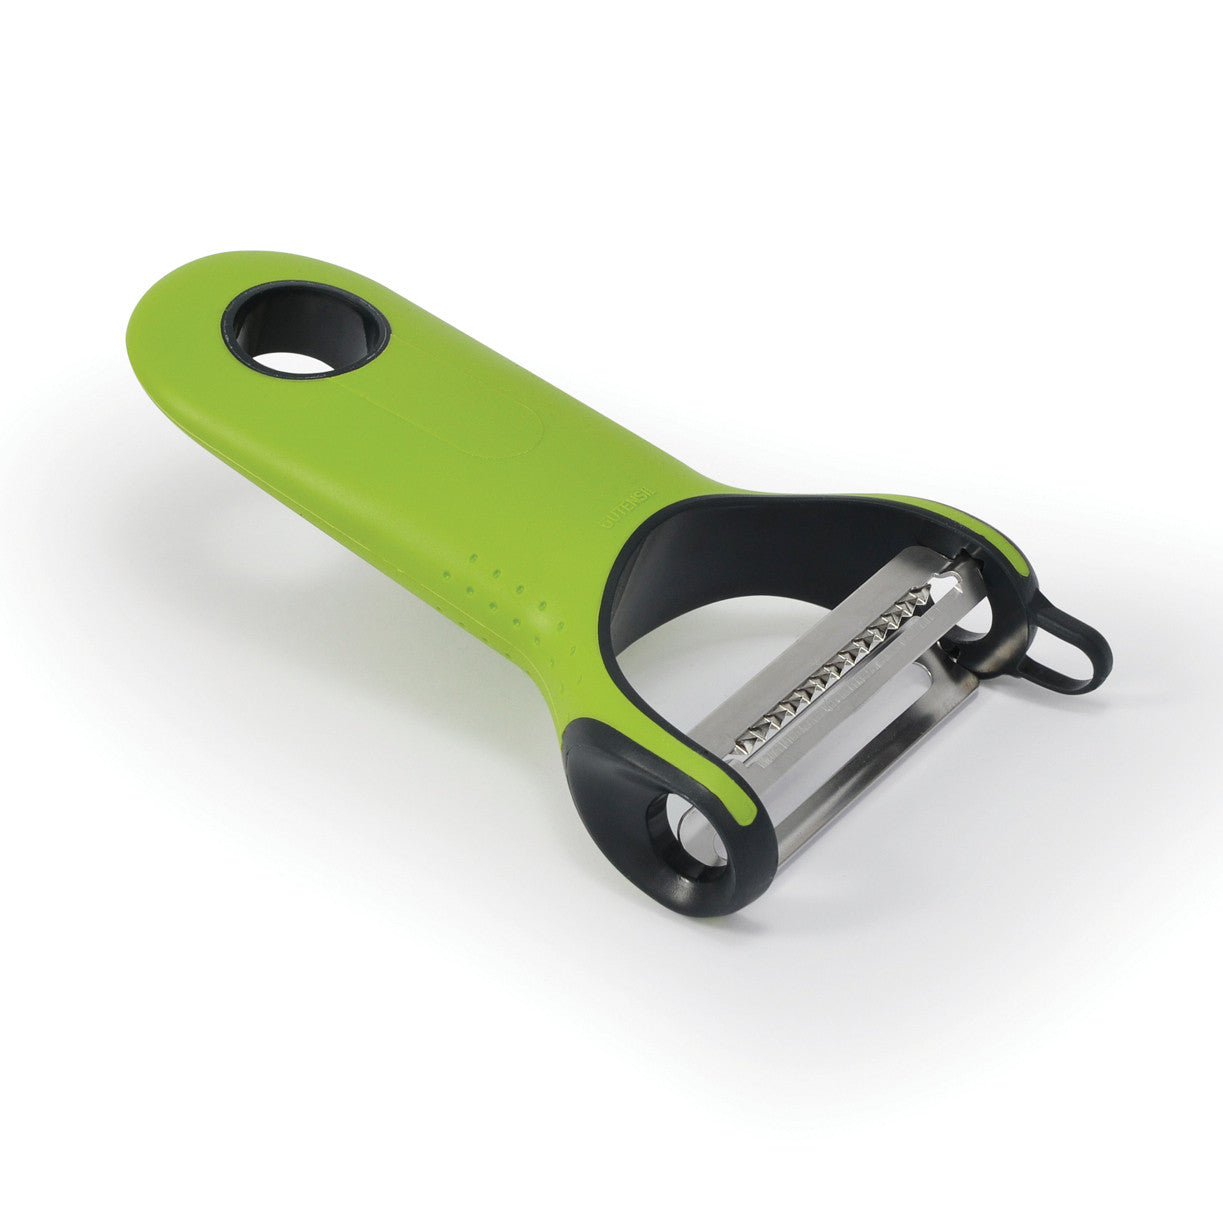 Strip² - Julienne and Vegetable Peeler - clever multi-functional tool